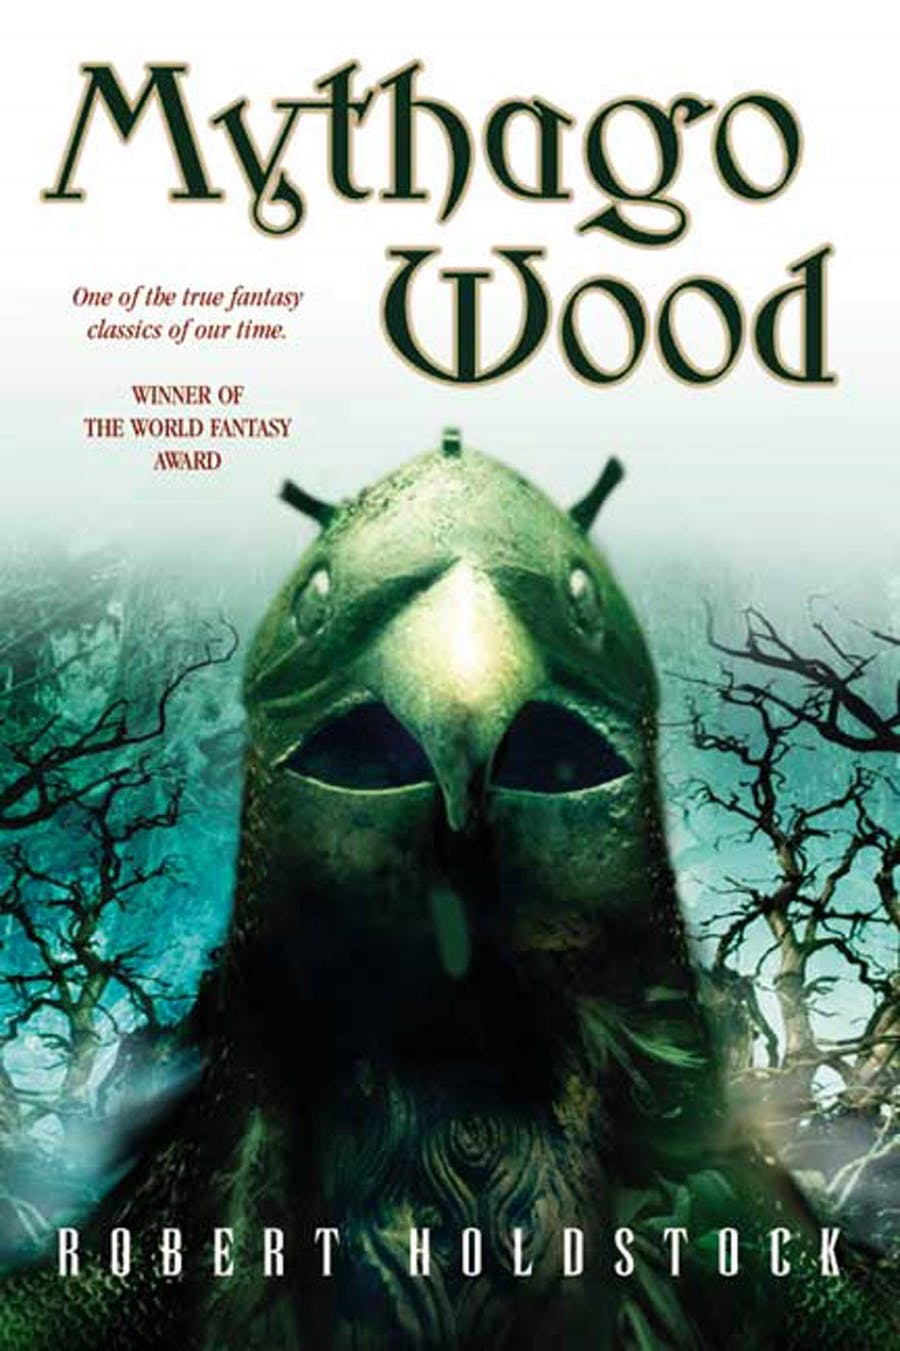 Mythago Wood by Robert Holdstock - tpbk